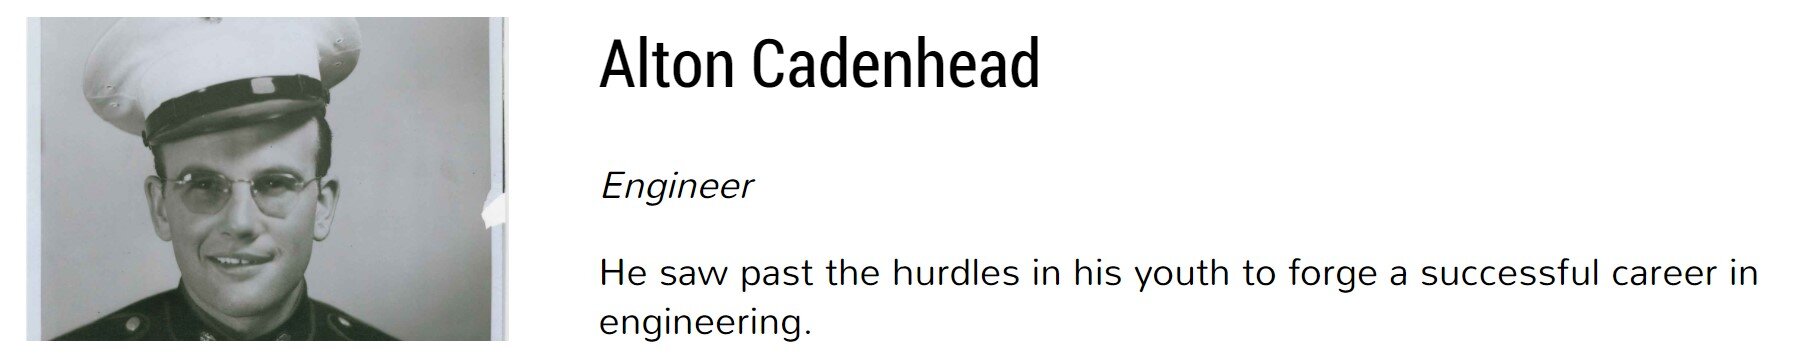 Cadenhead.jpg